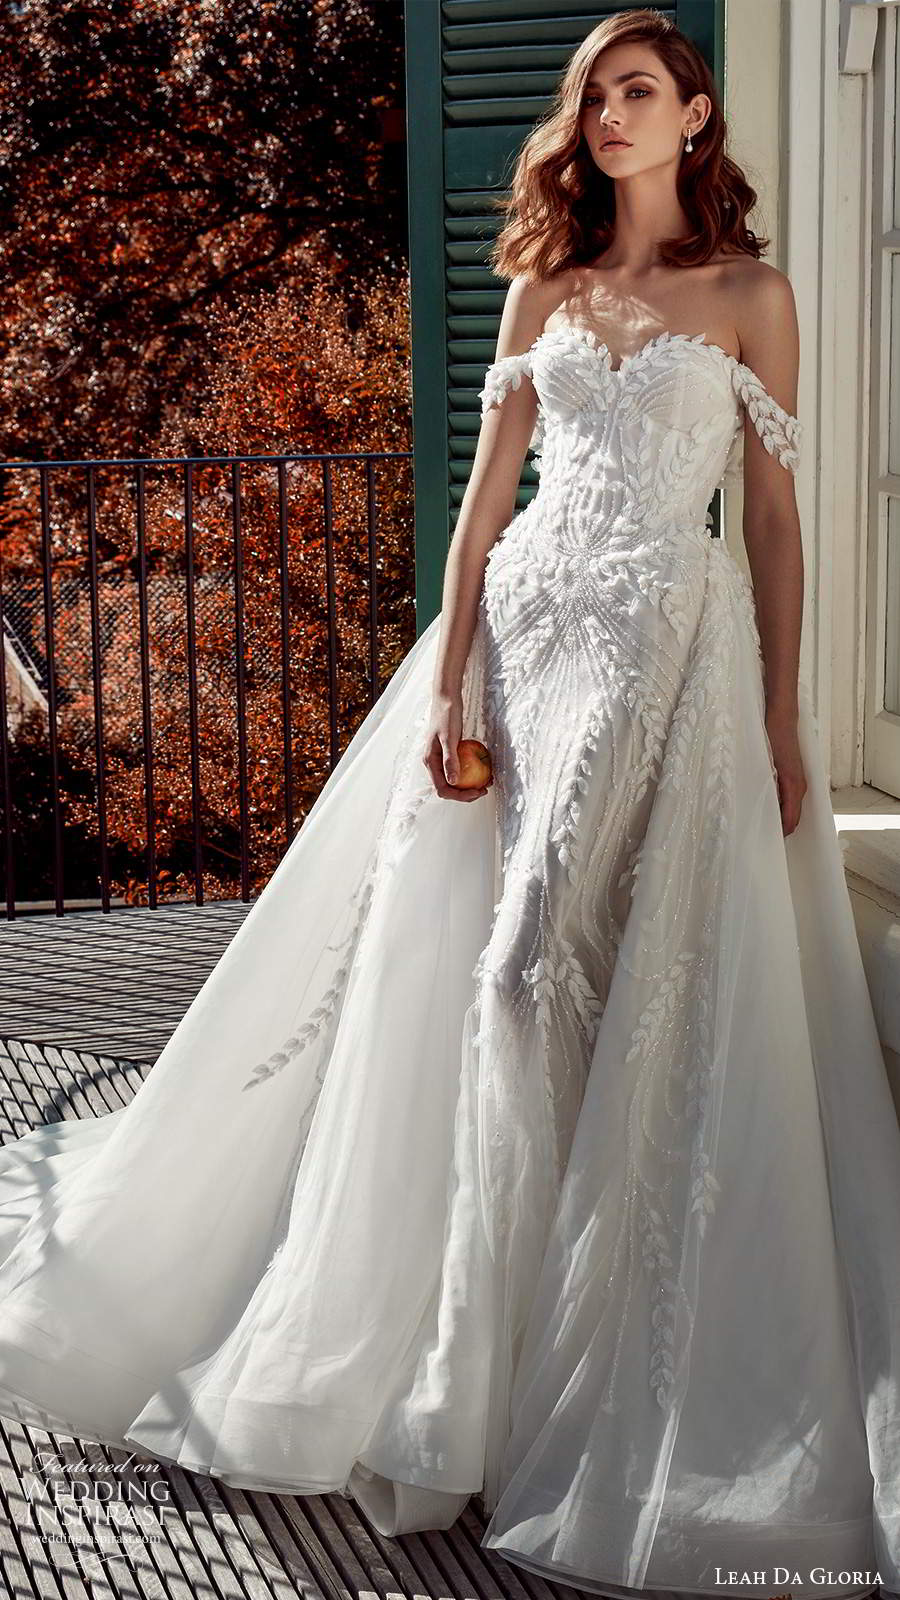 leah da gloria 2020 bridal couture off shoulder straps sweetheart neckline fully embellished sheath wedding dress ball gown overskirt chapel train (2) mv